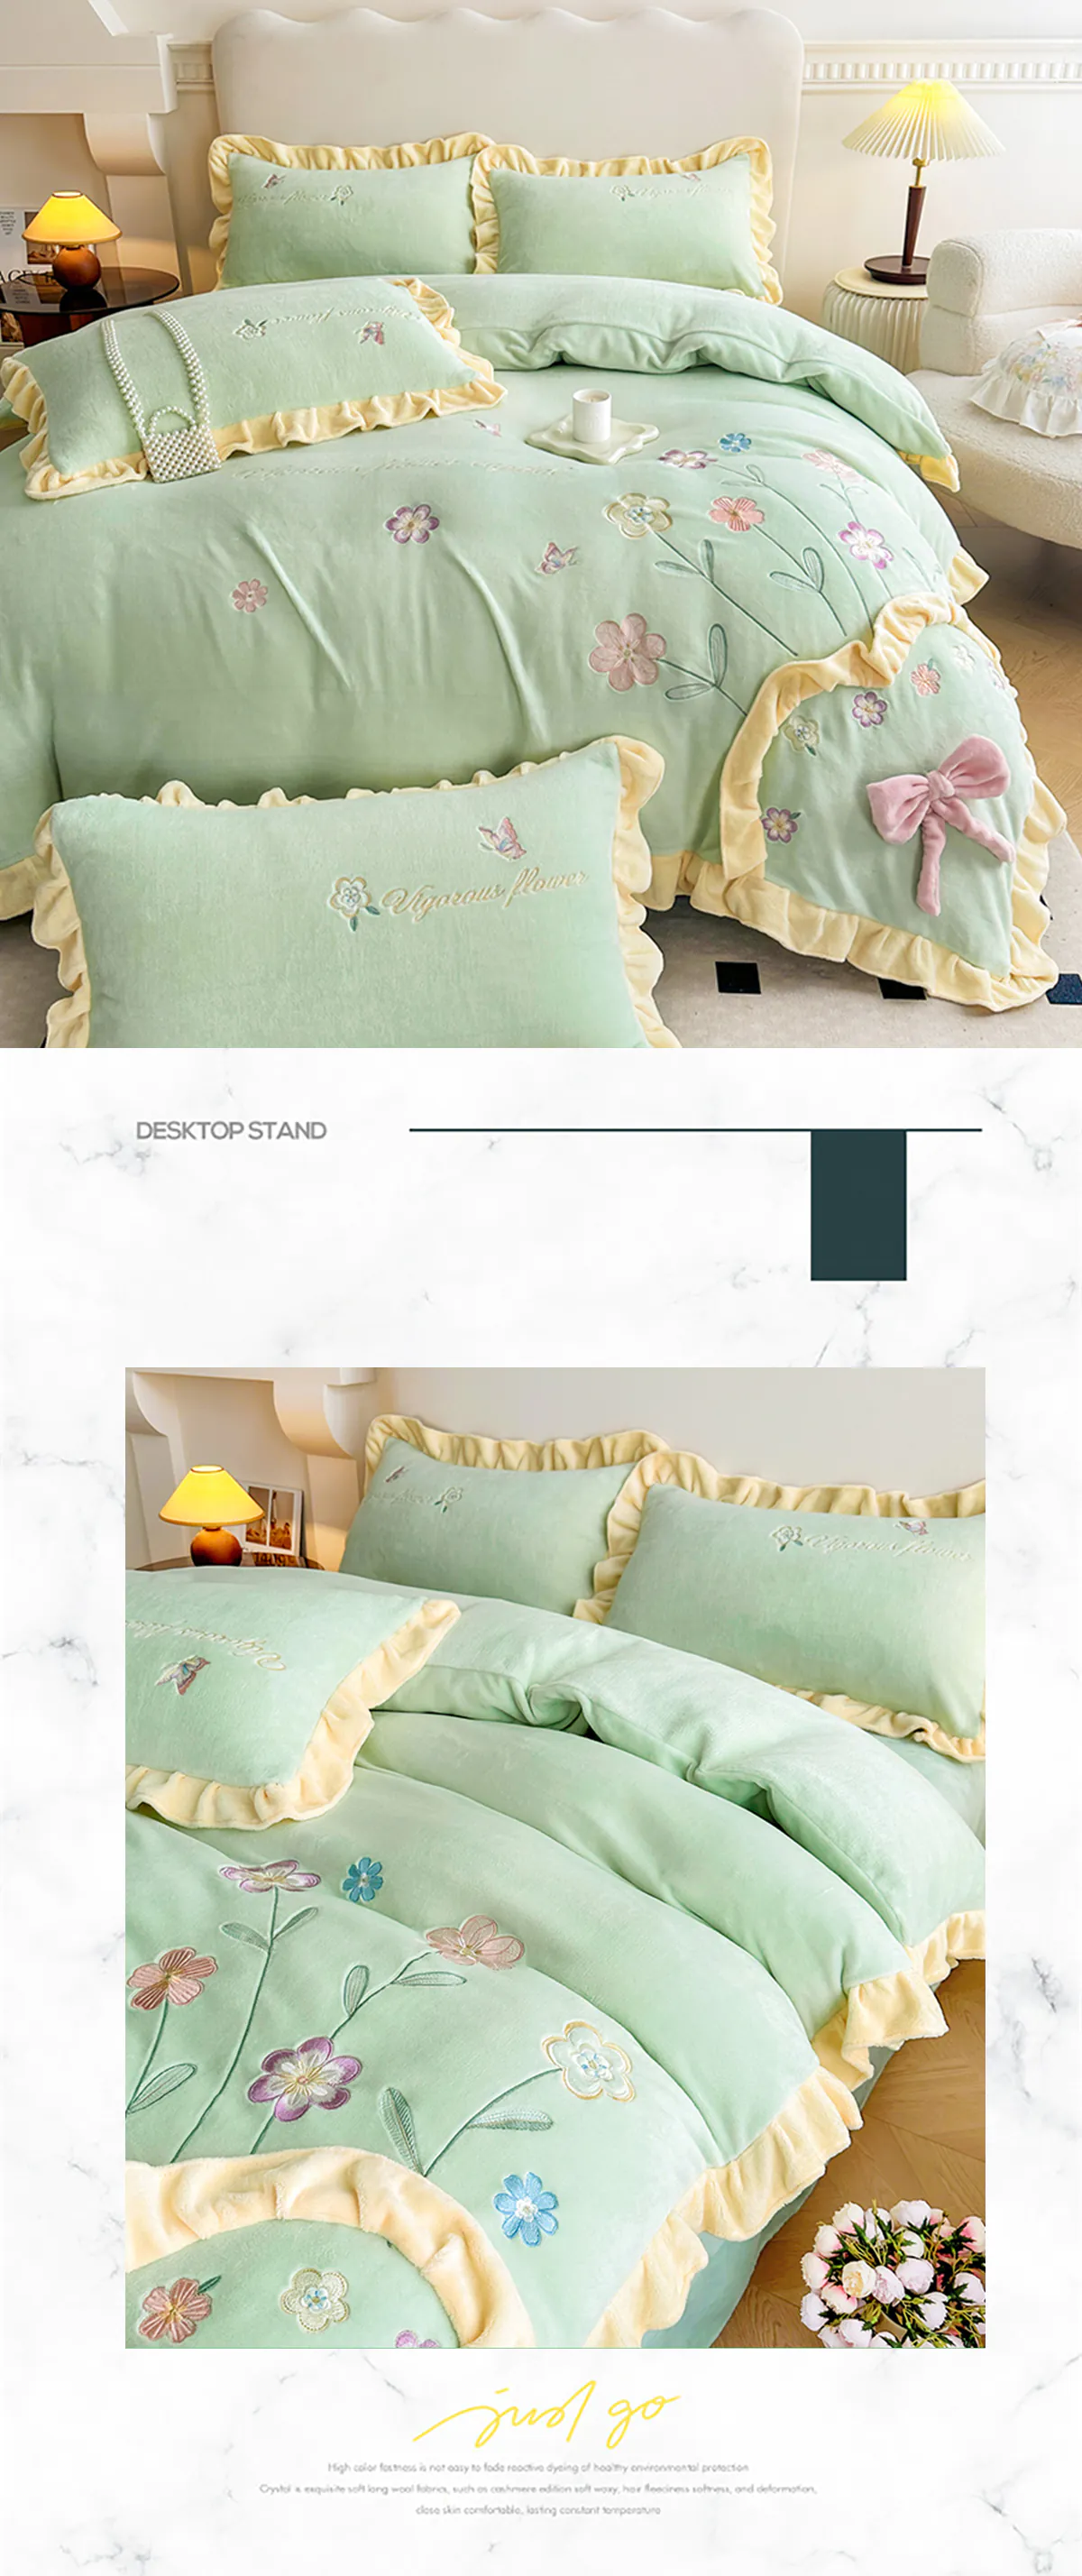 Romantic-Milk-Fiber-Comforter-Cover-Bed-Sheet-Pillowcases-4-Pcs-Set14